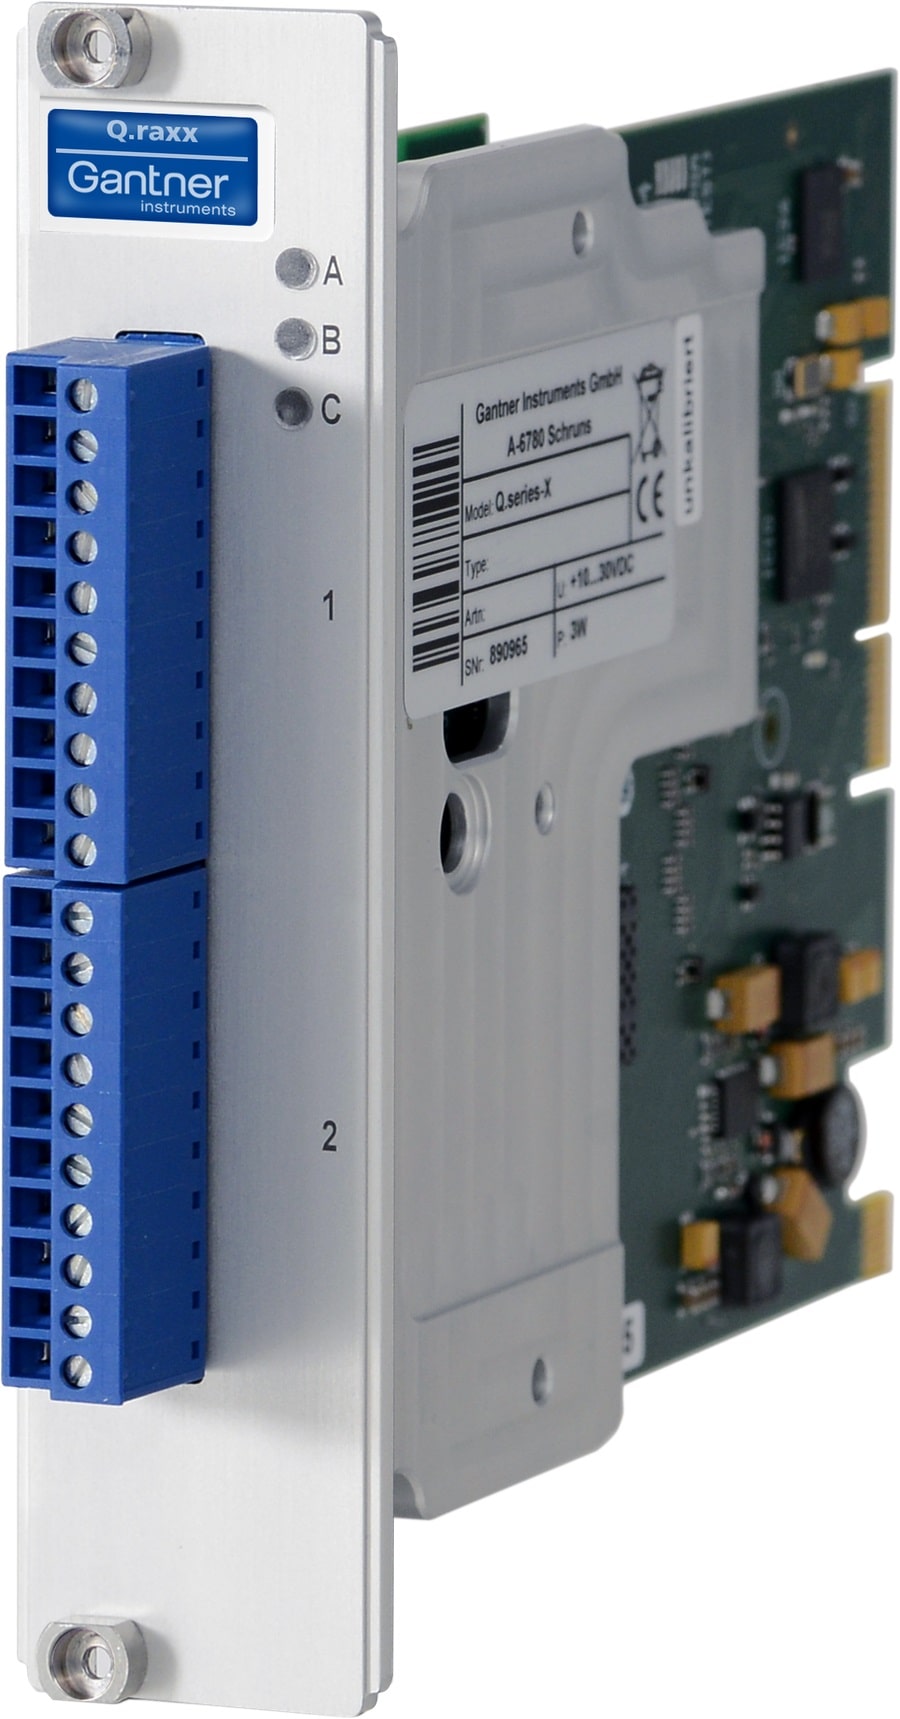 Q.raxx XL A107 Datenerfassungsmodul (3HE) 4 universelle analoge Eingangskanäle